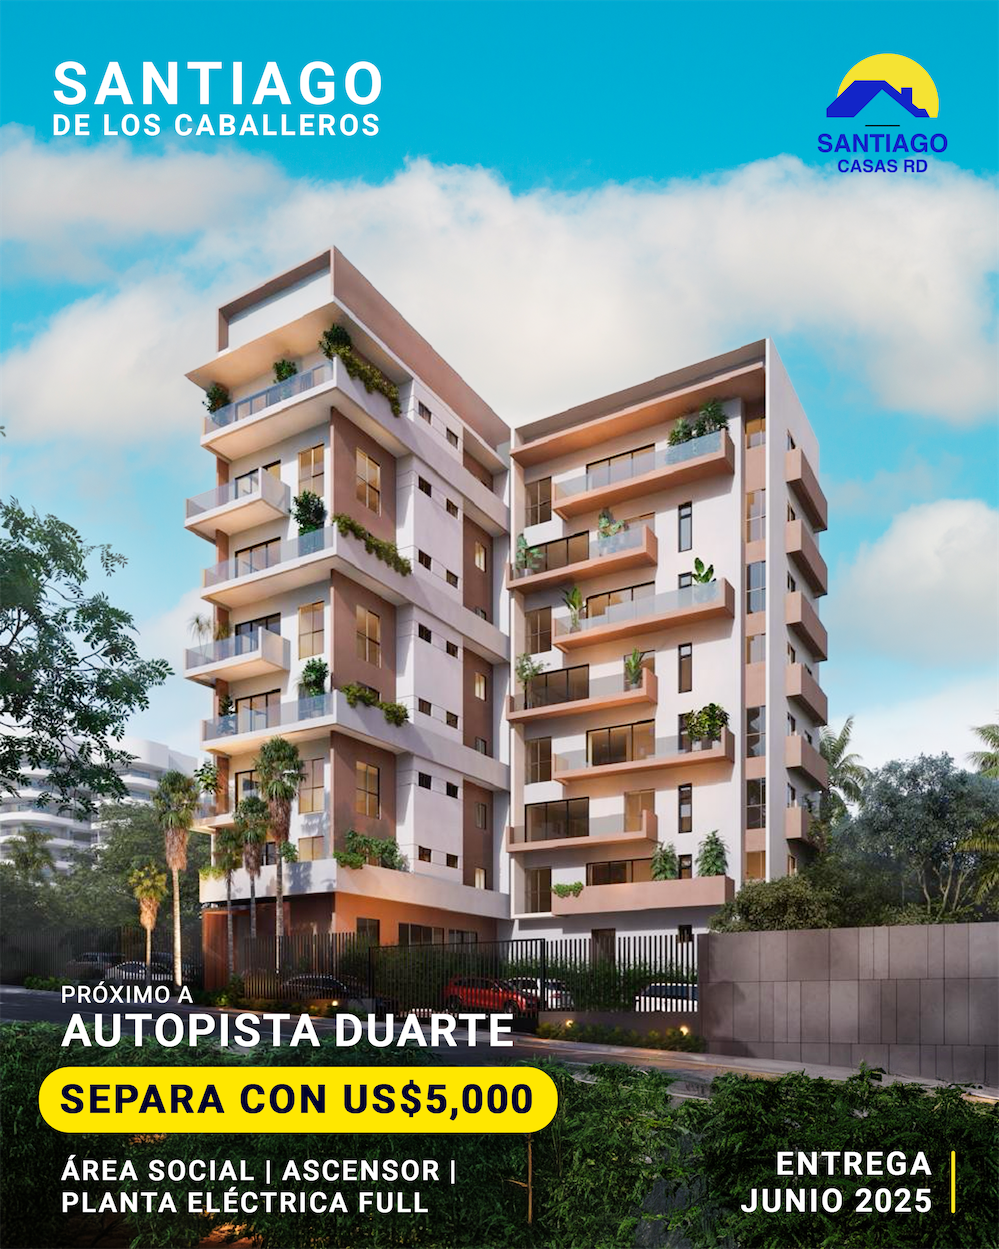 apartamentos - Alta vista Un Proyecto de Apartamentos en construccion Proximo a Aut Duarte. 6